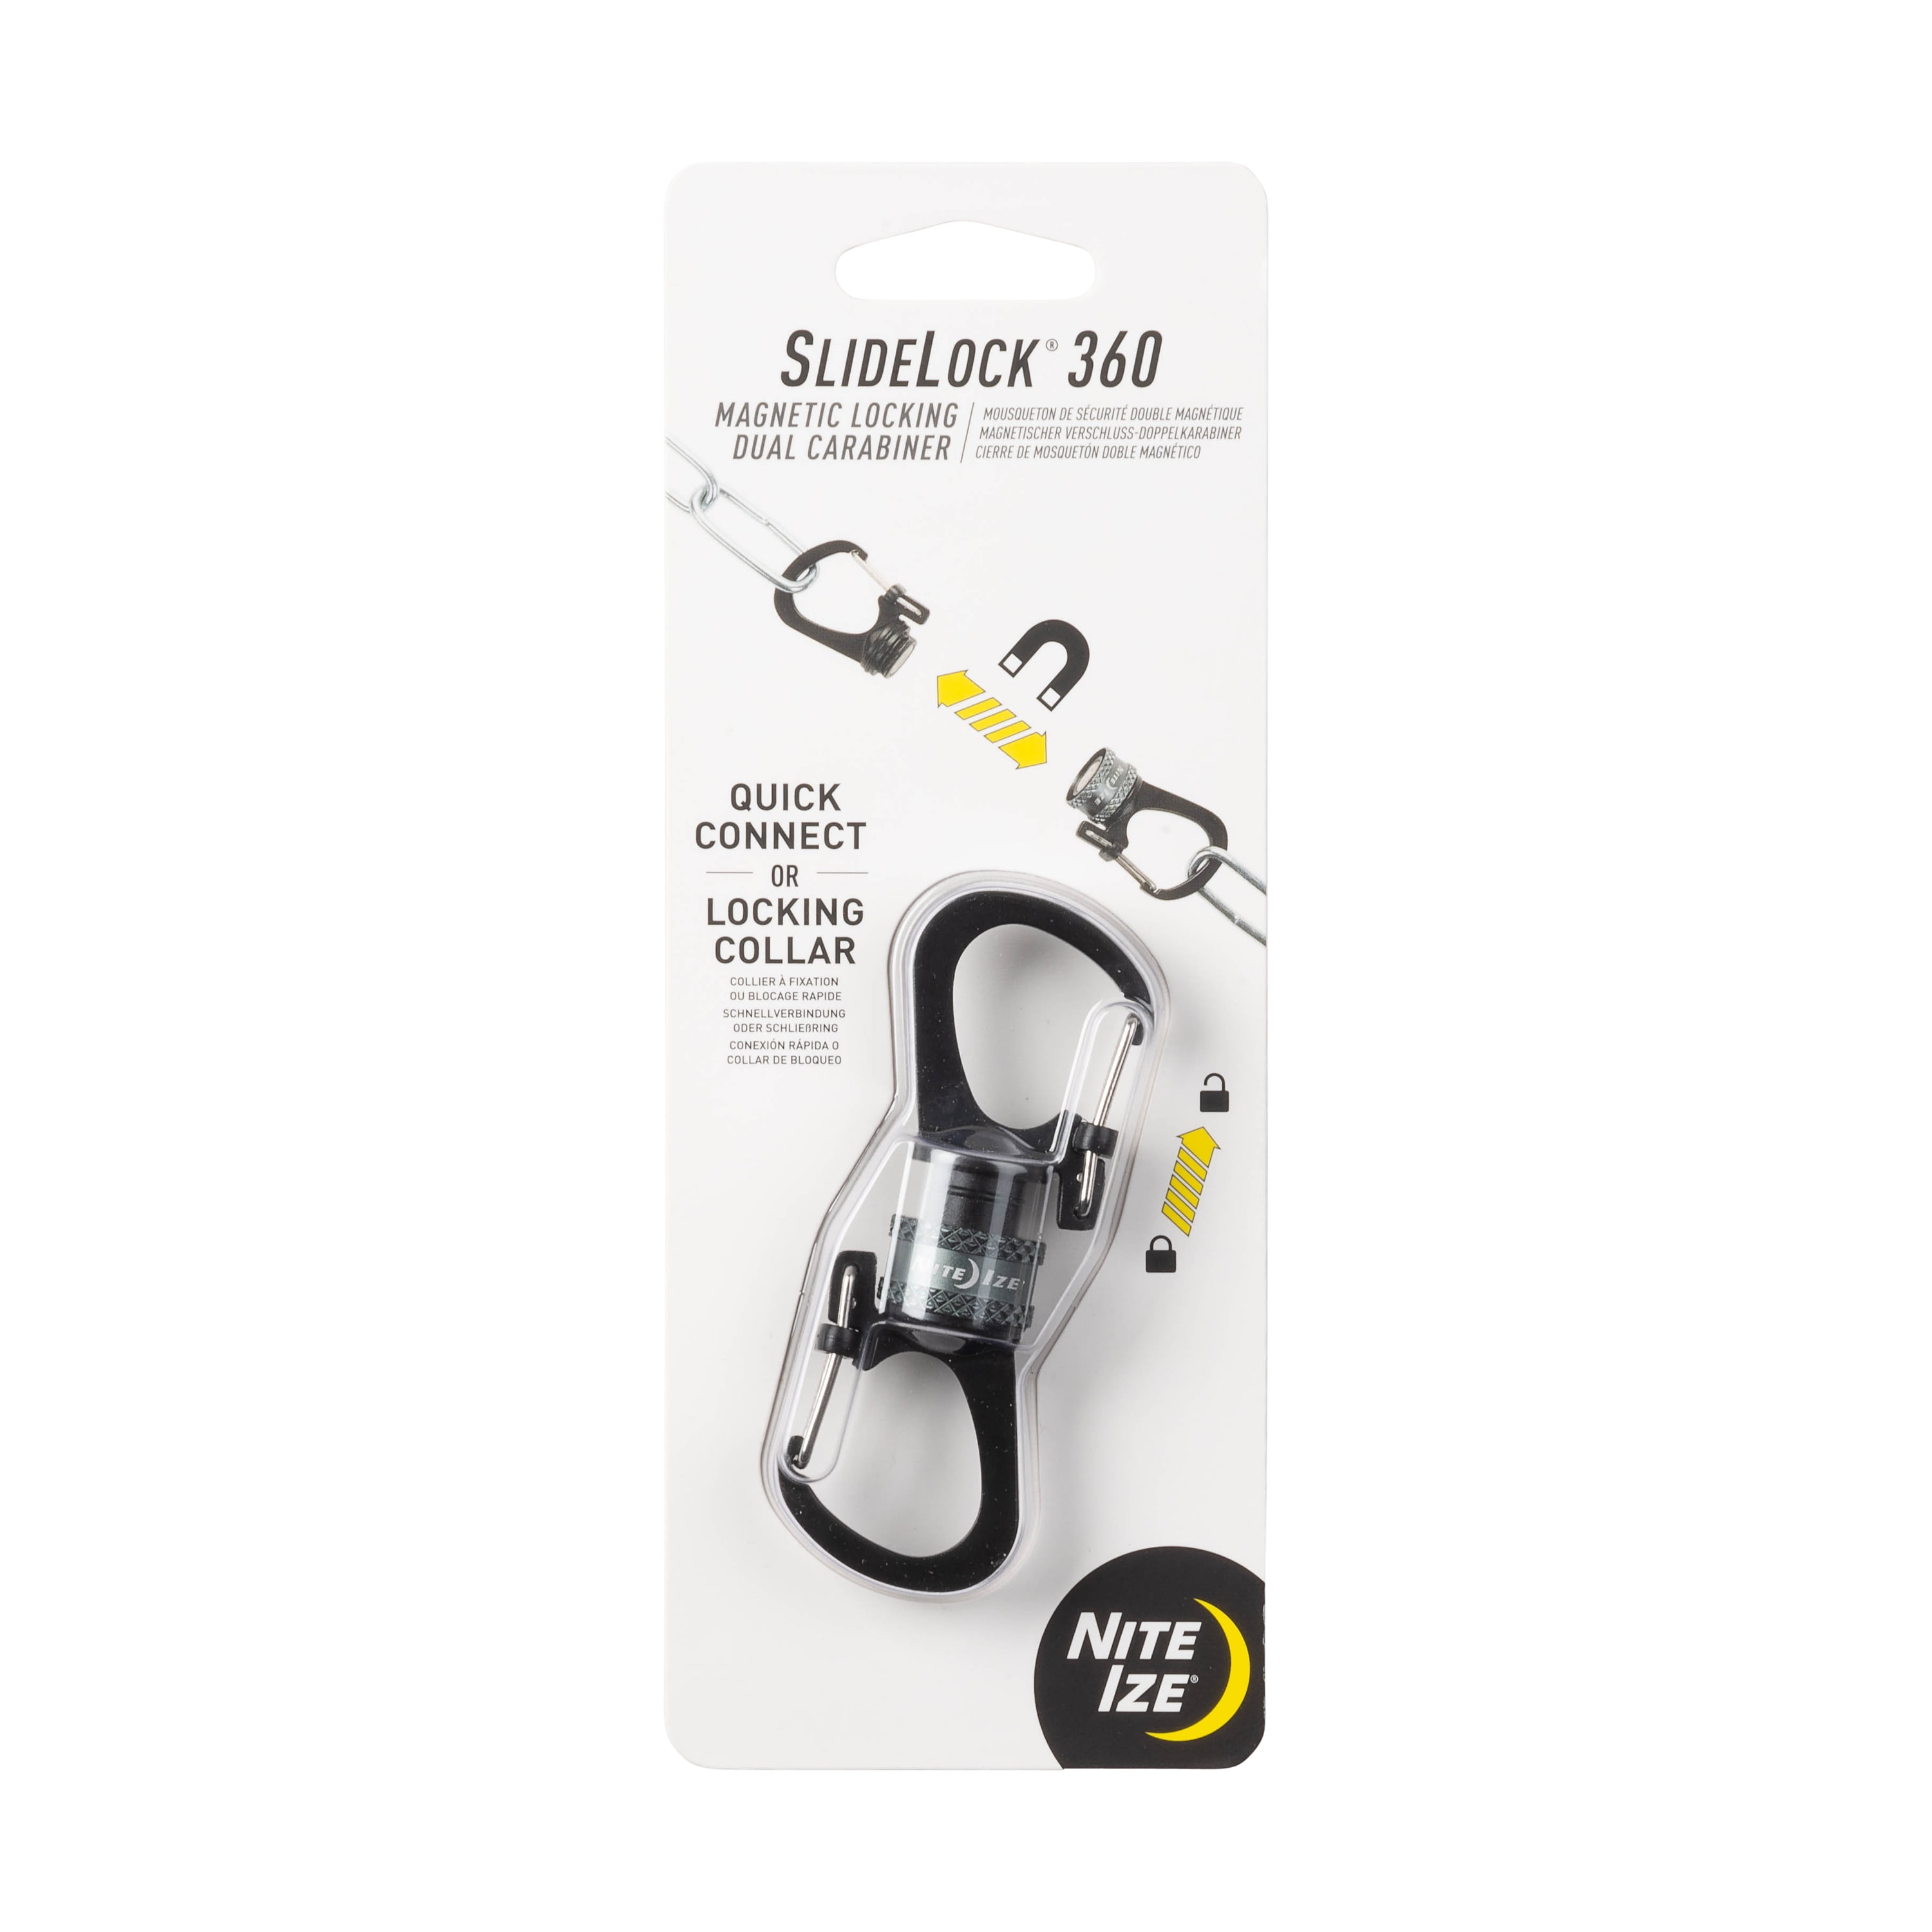 Nite Ize SlideLock 360 Magnetic Locking Dual Carabiner, Charcoal